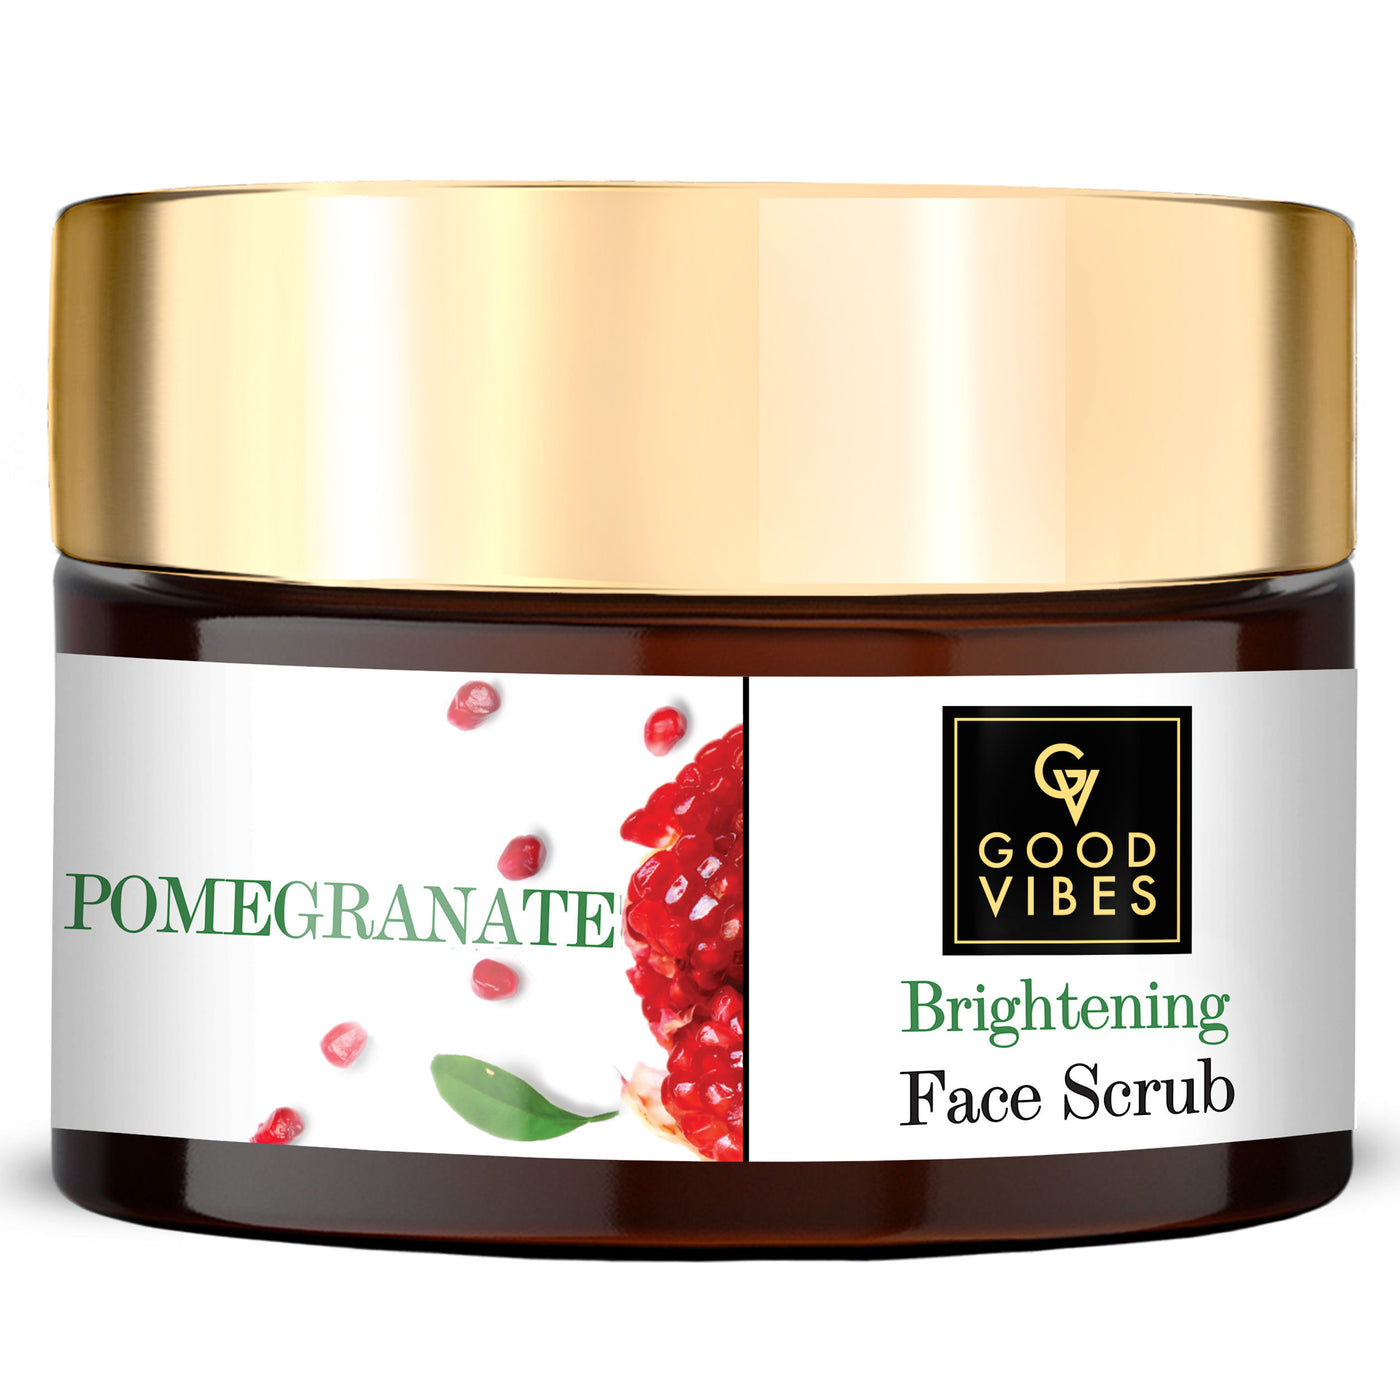 Good Vibes Brightening Face Scrub - Pomegranate (50 g) - 1